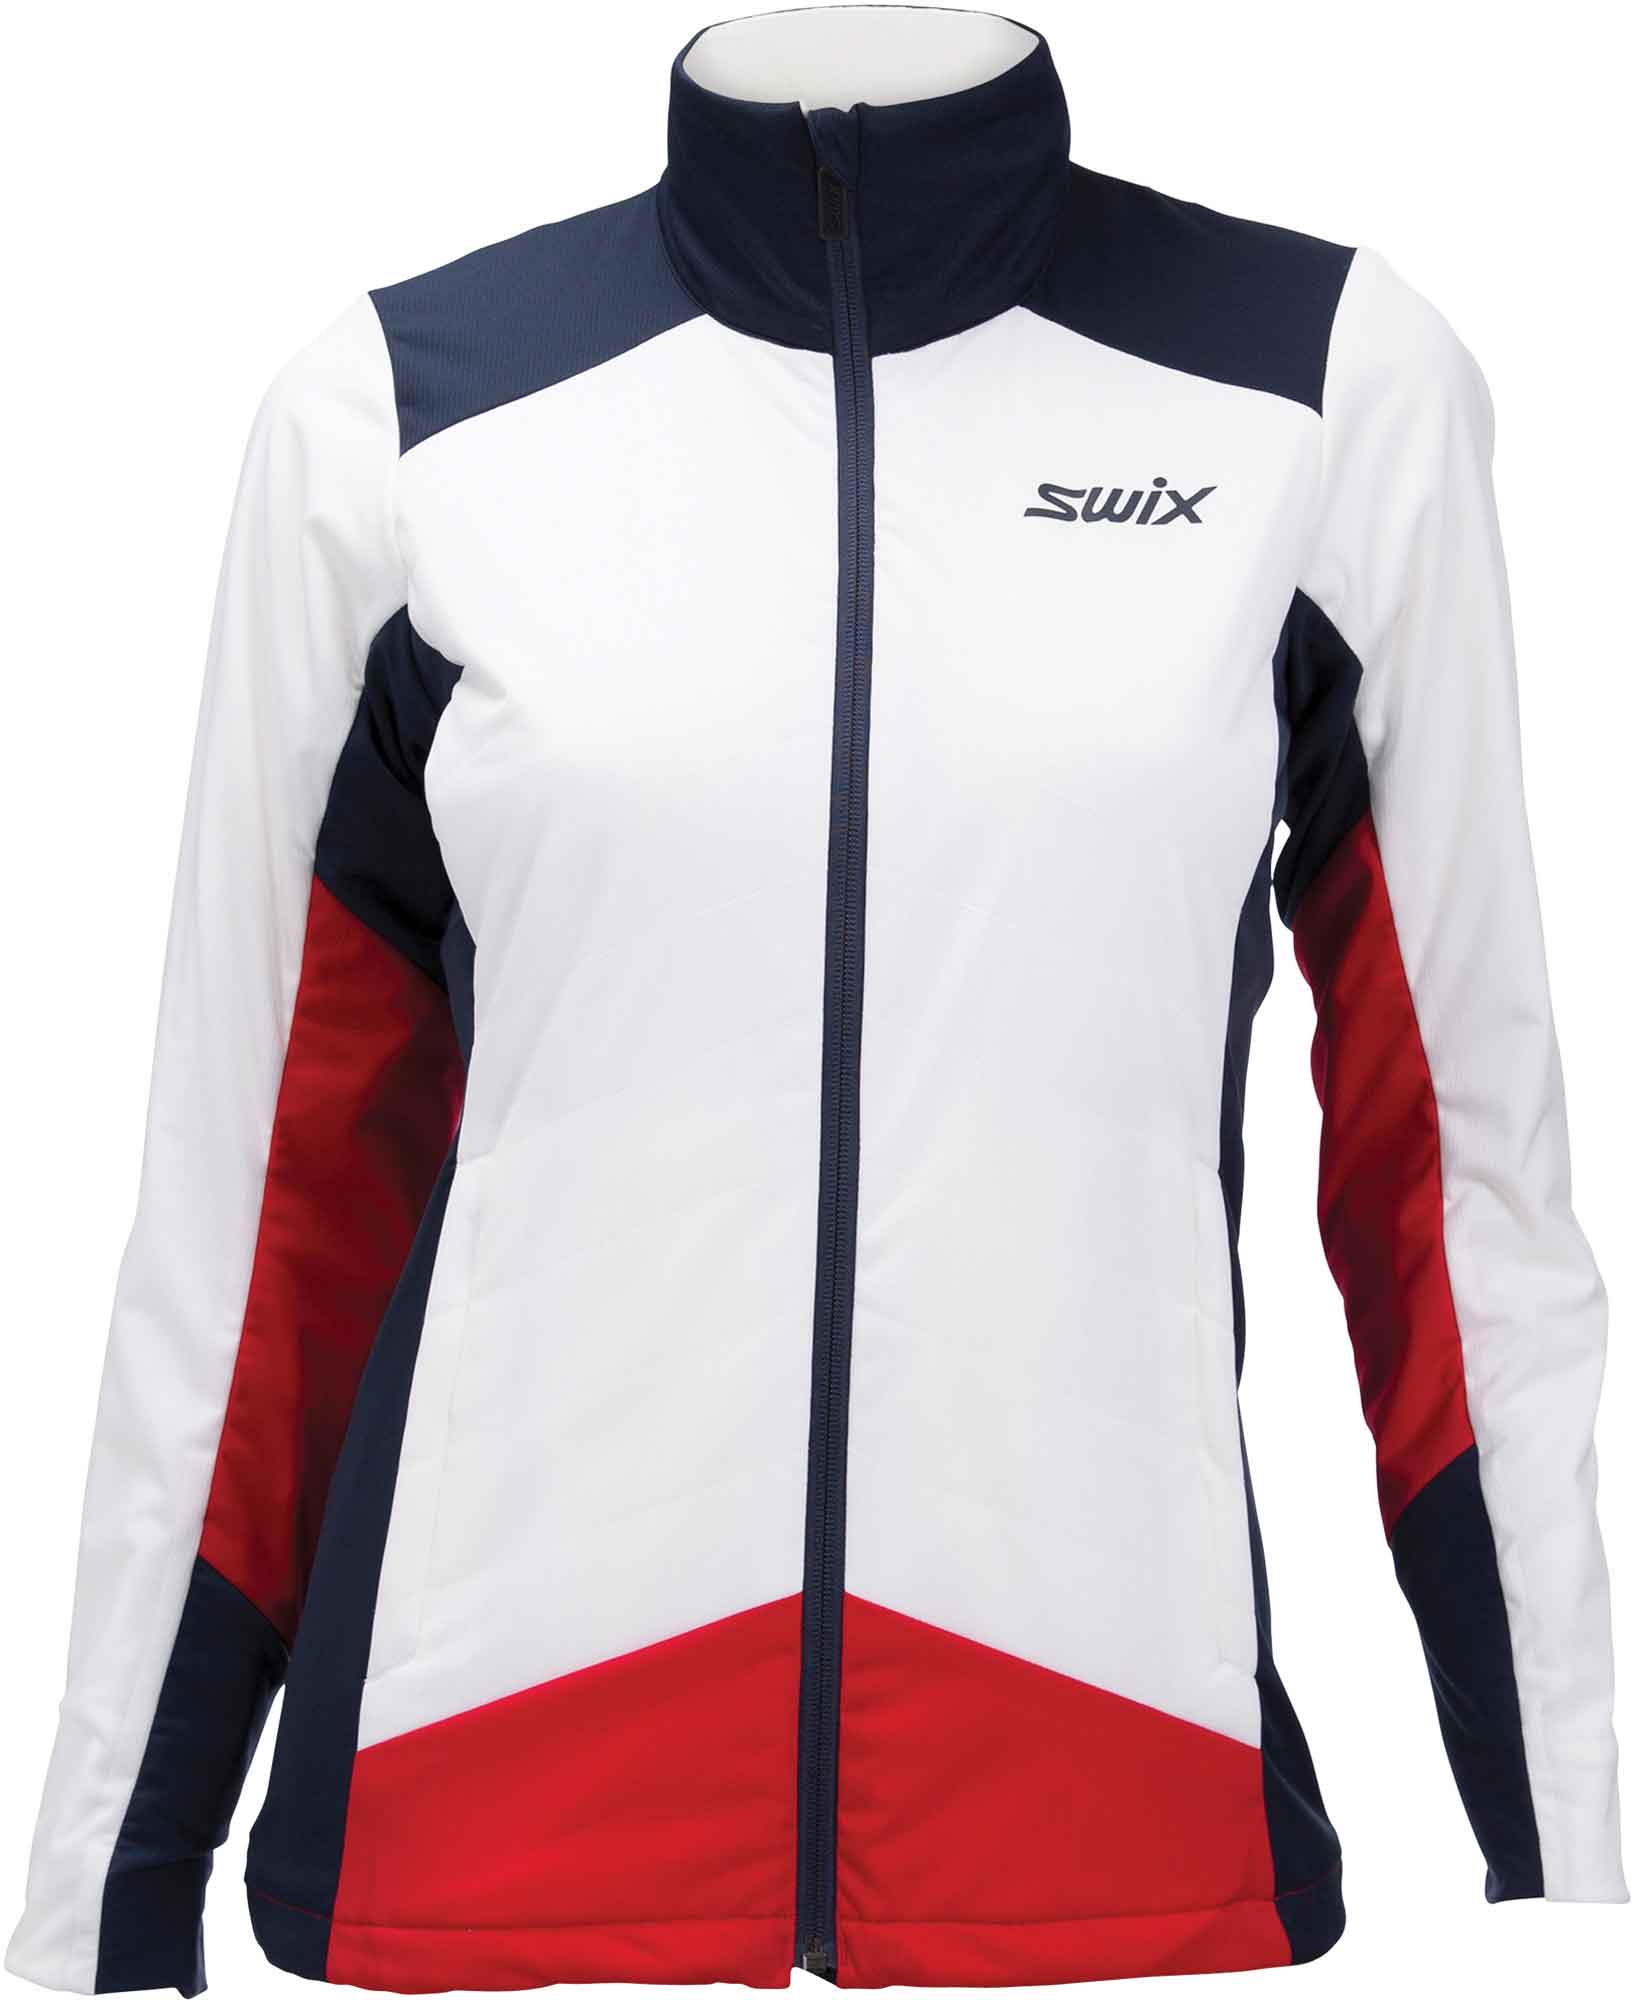 Women’s nordic ski jacket